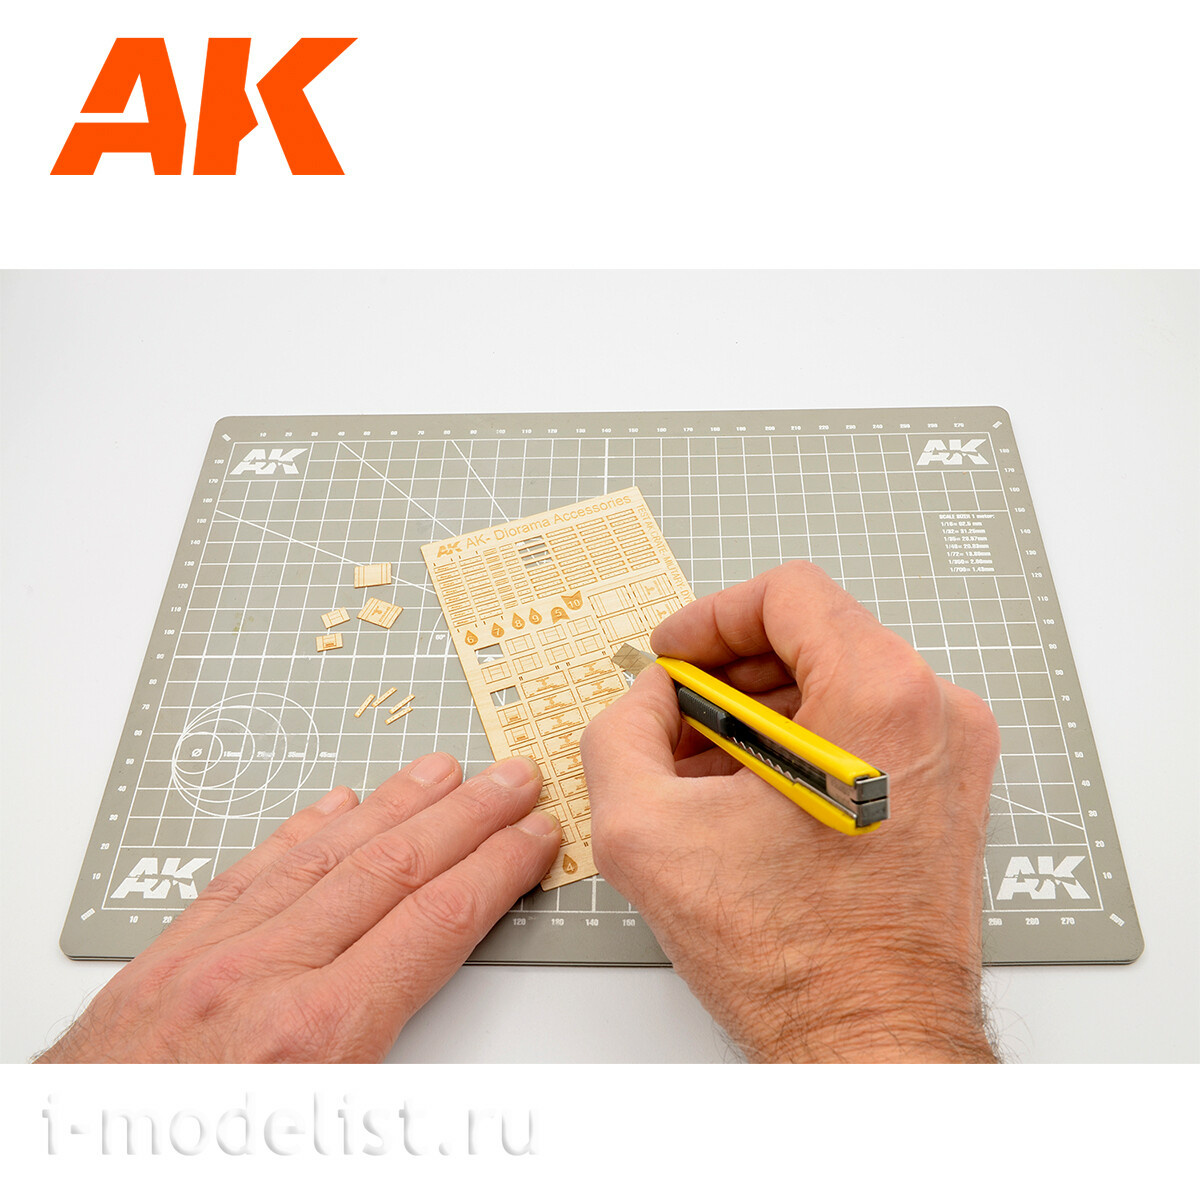 AK8229 AK Interactive 1/35 Деревянные коробки для динамитов №002 лазерной резки, 8 шт.